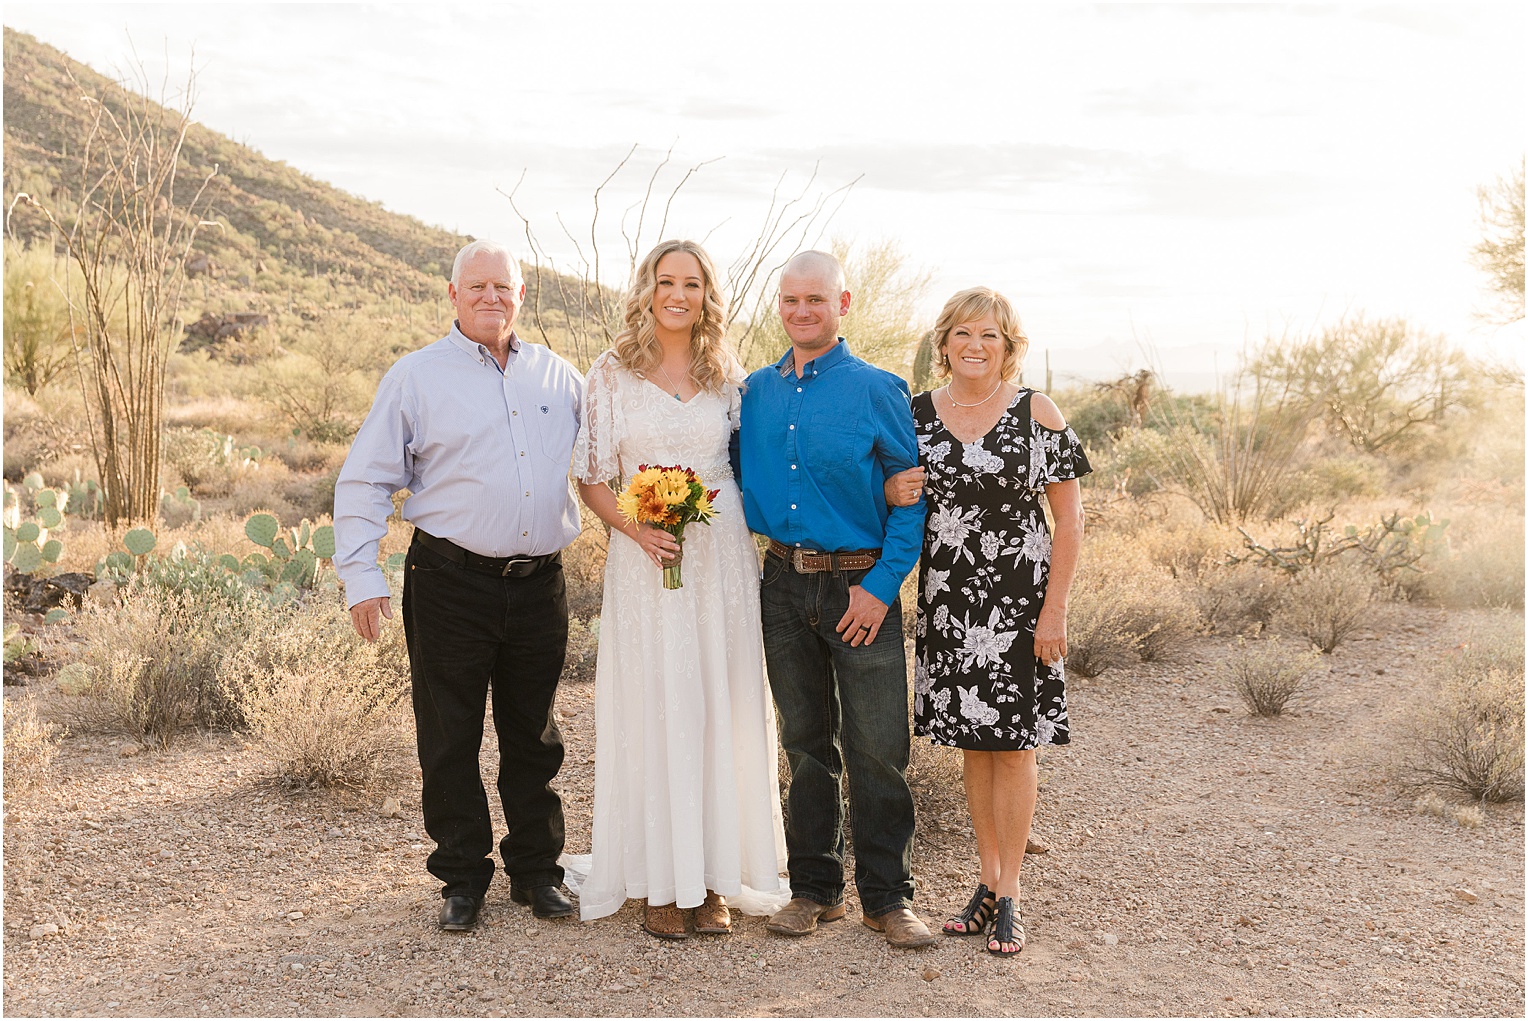 Gates Pass Wedding Tucson Arizona Andrea + Cameron family photos